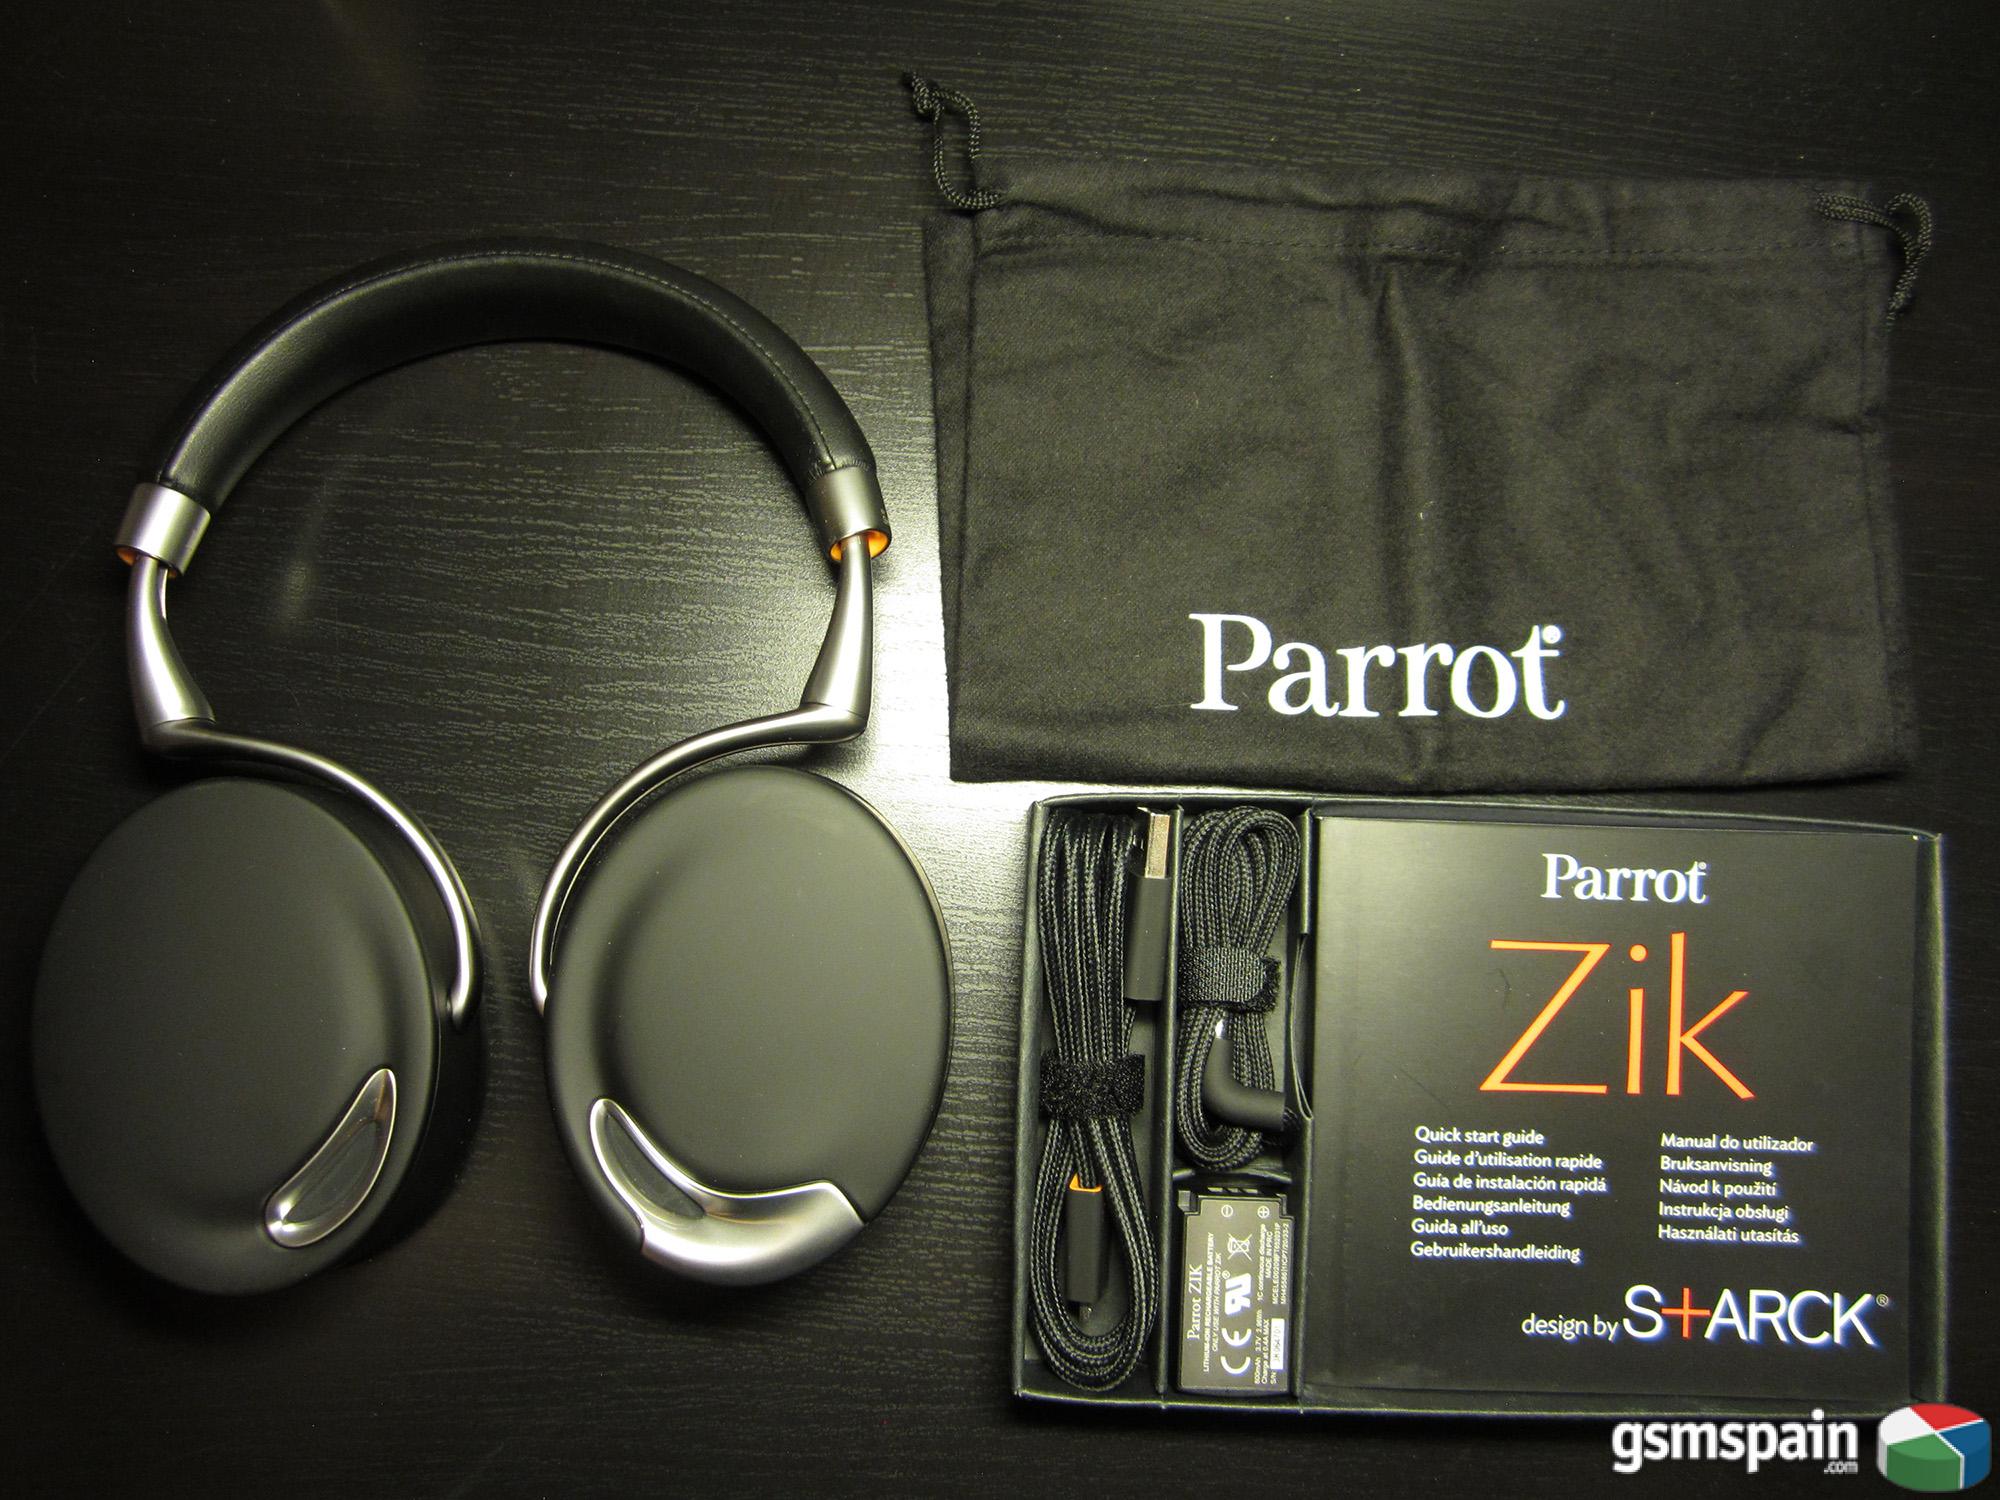 Parrot ZIK - Review